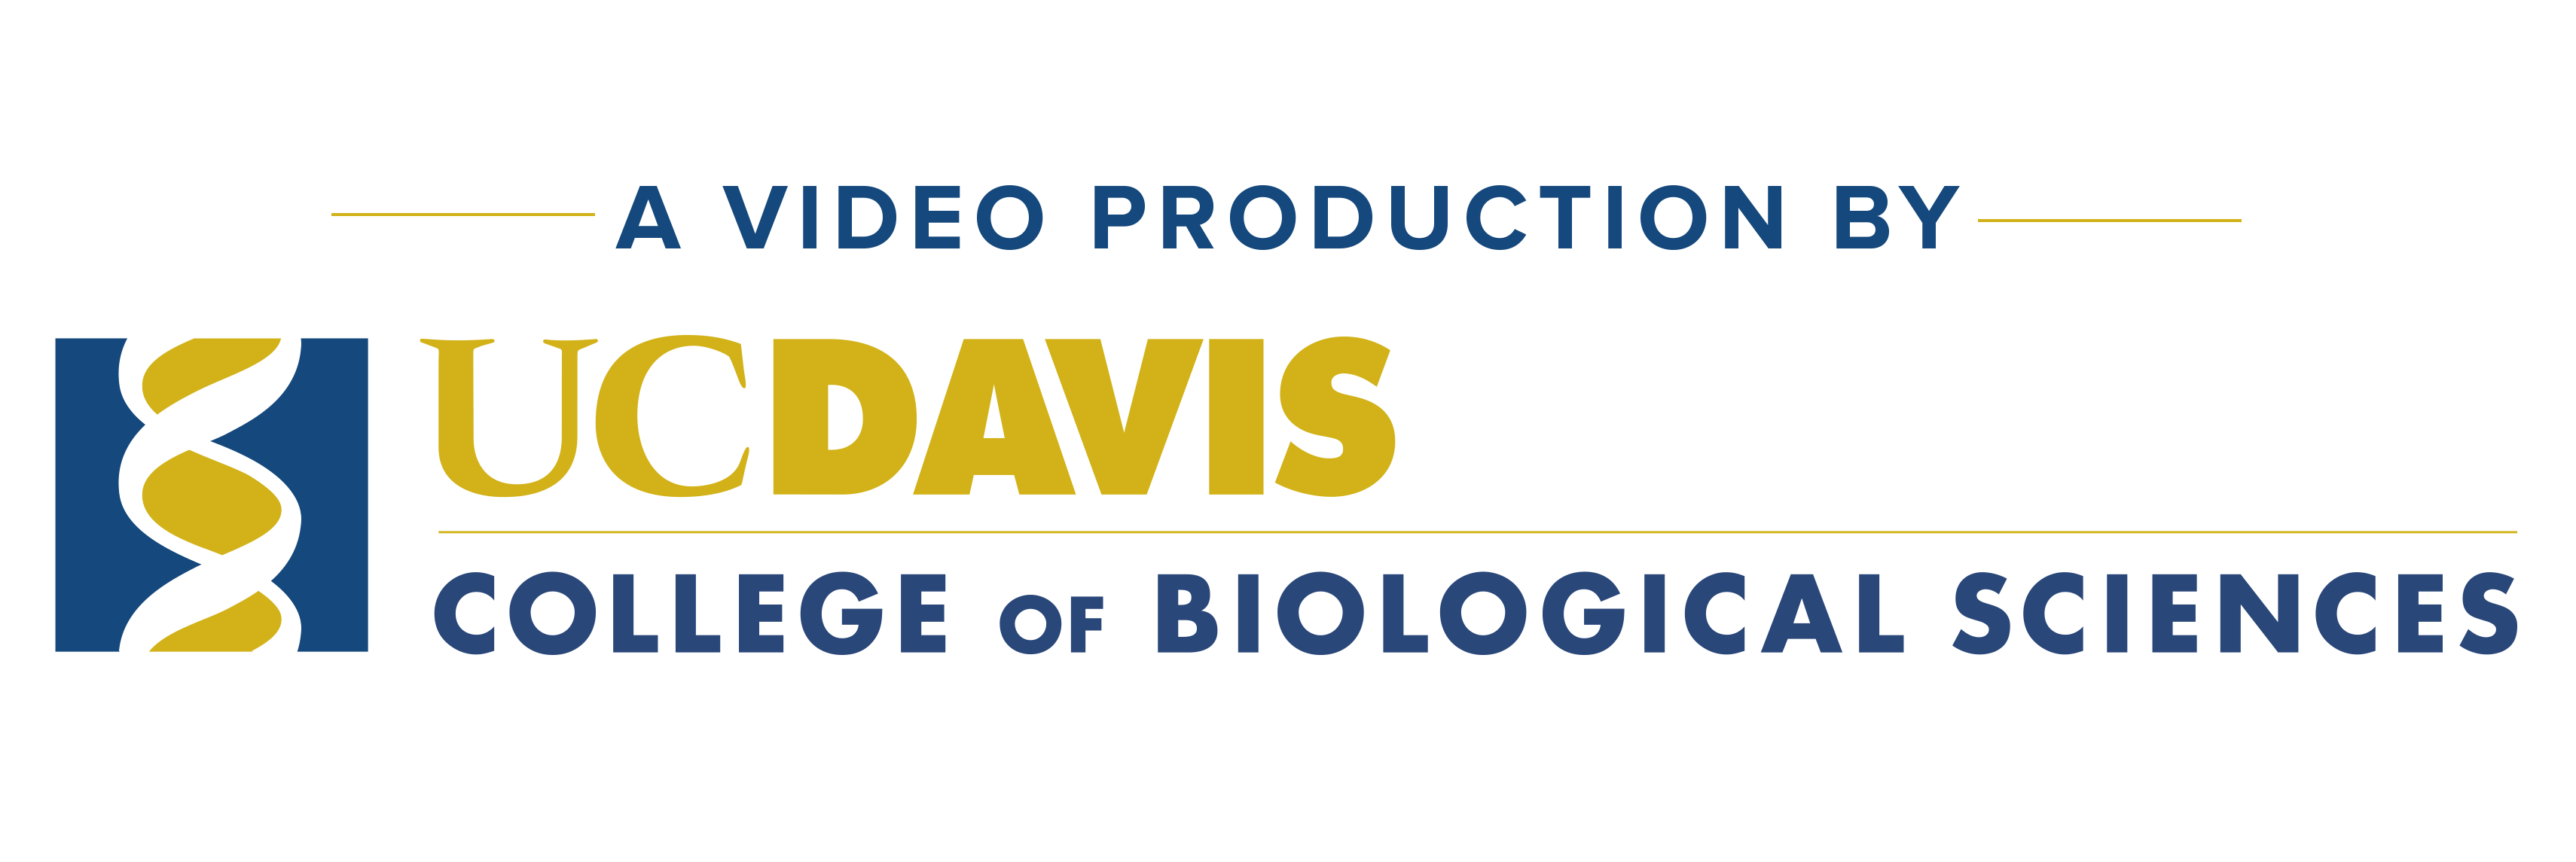 CBS video logo